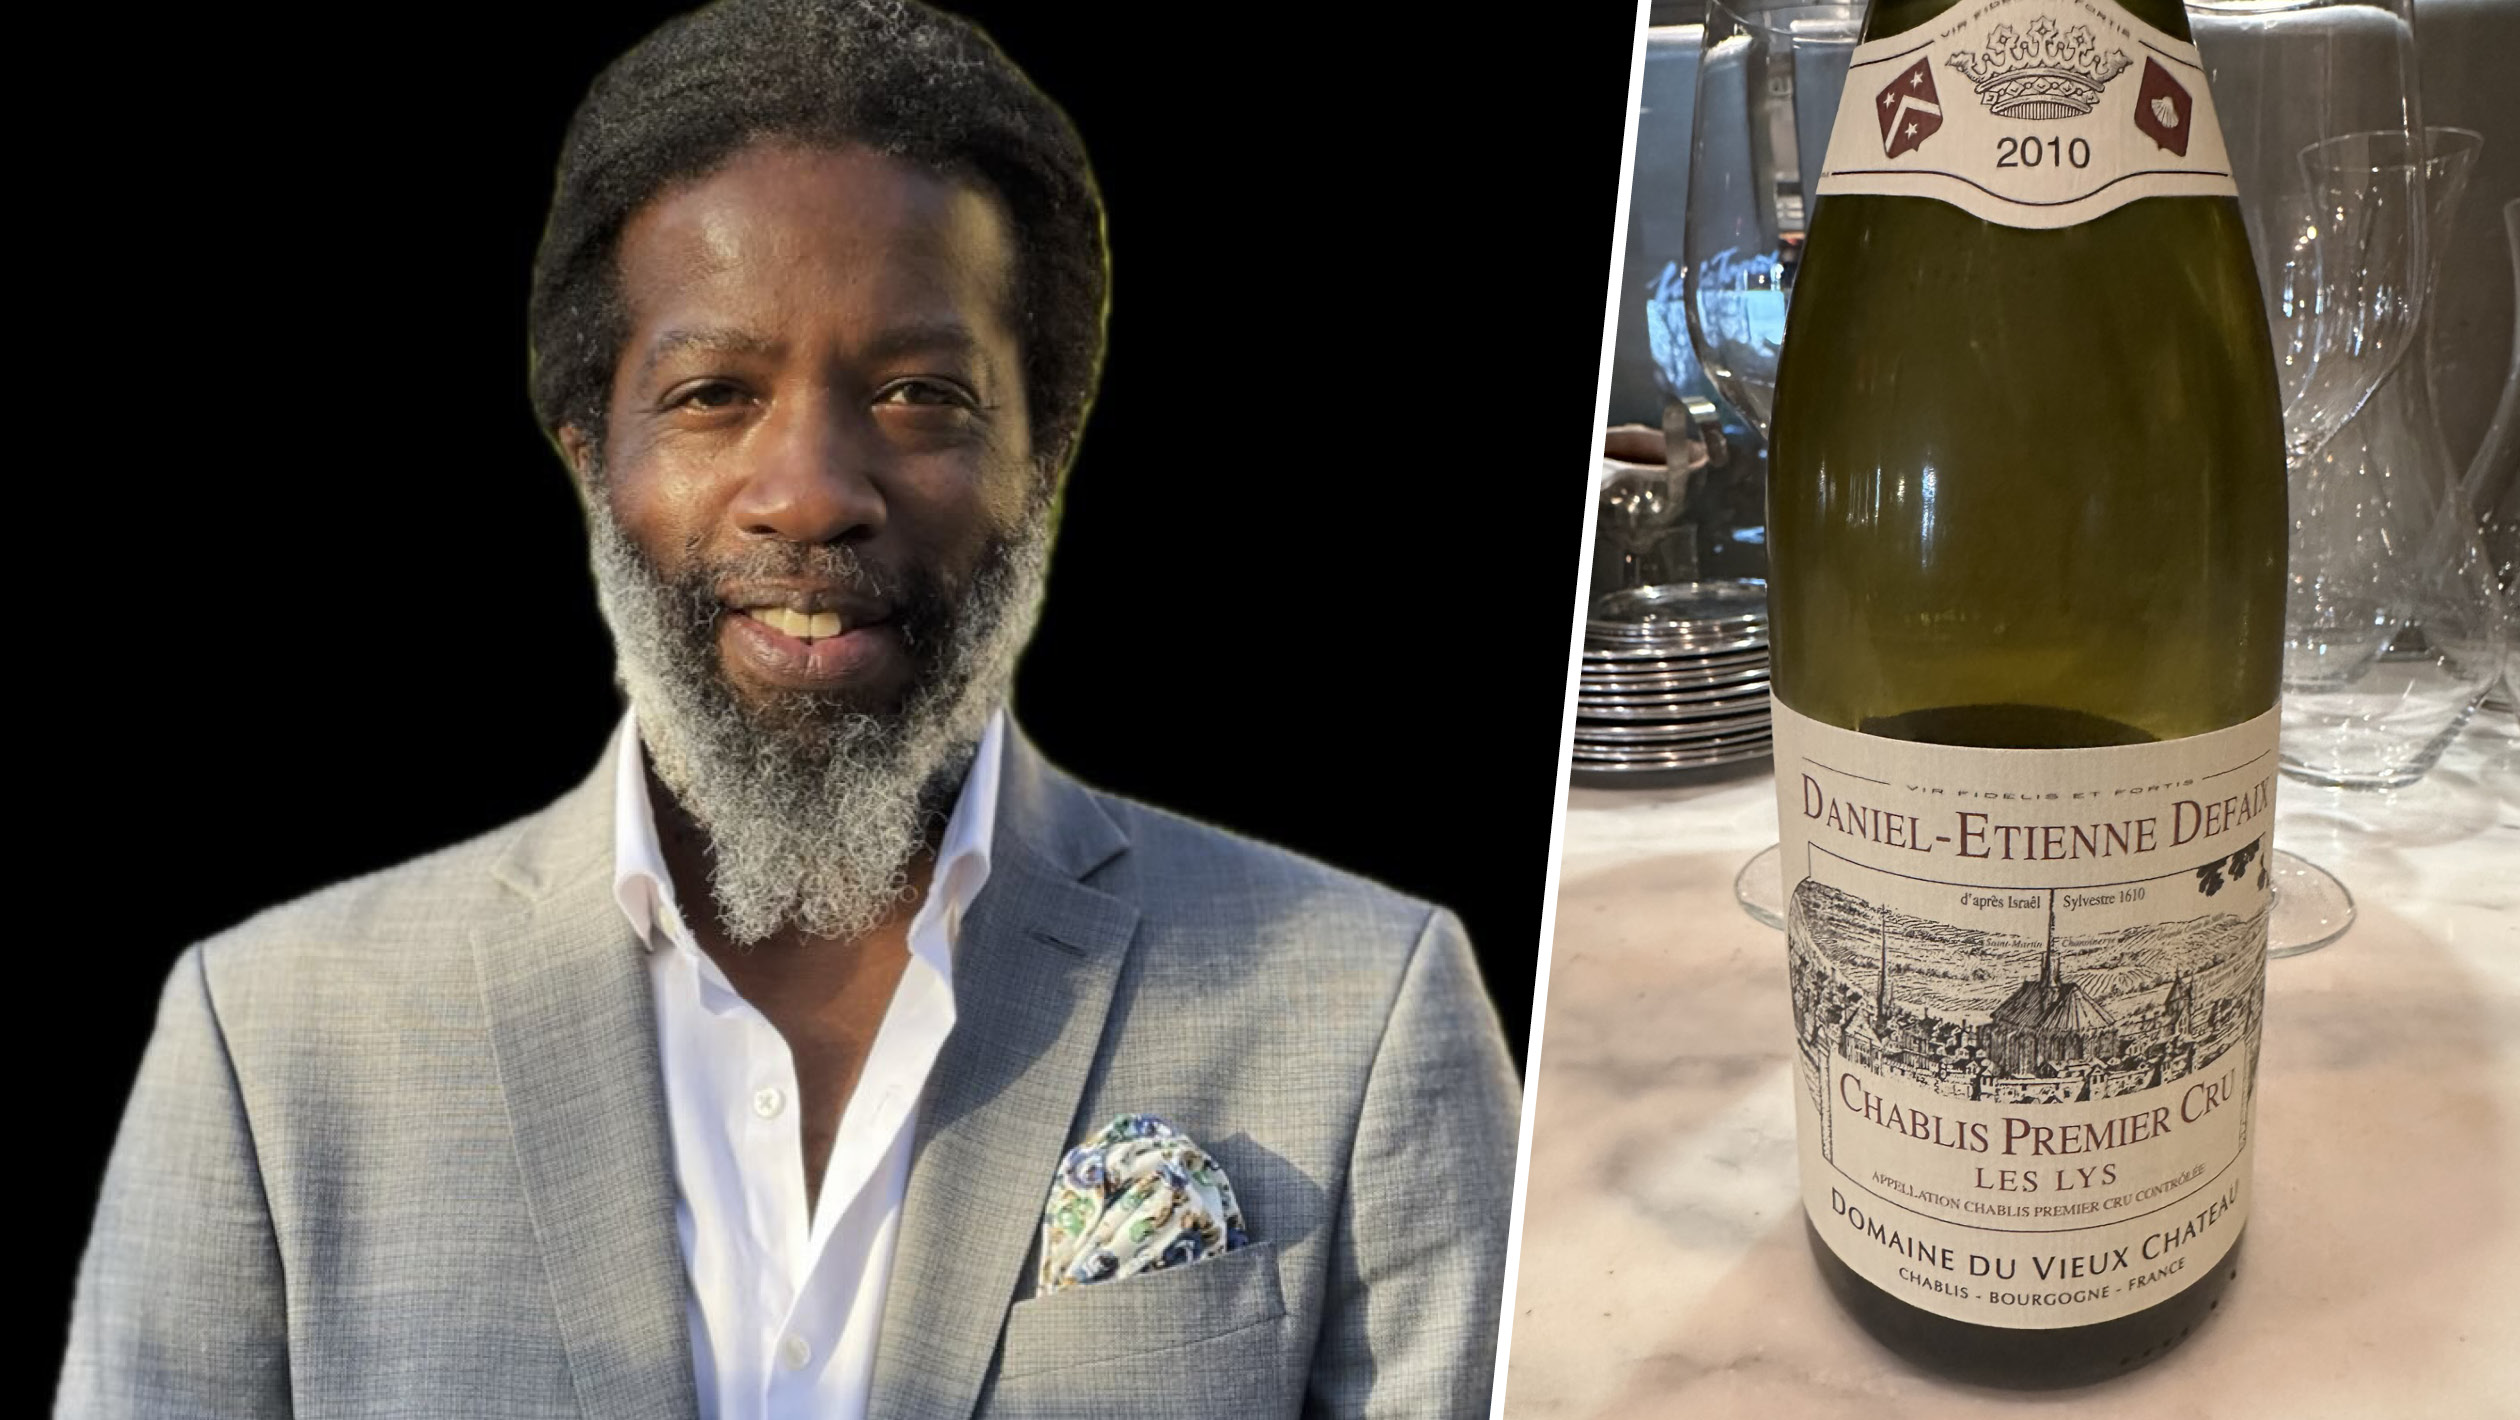 Daniel Etienne-Defaix ‘Les Lys’ 1er Cru, selected by Mike Lee, the wine director of La Toque. Photos courtesy of Mike Lee.